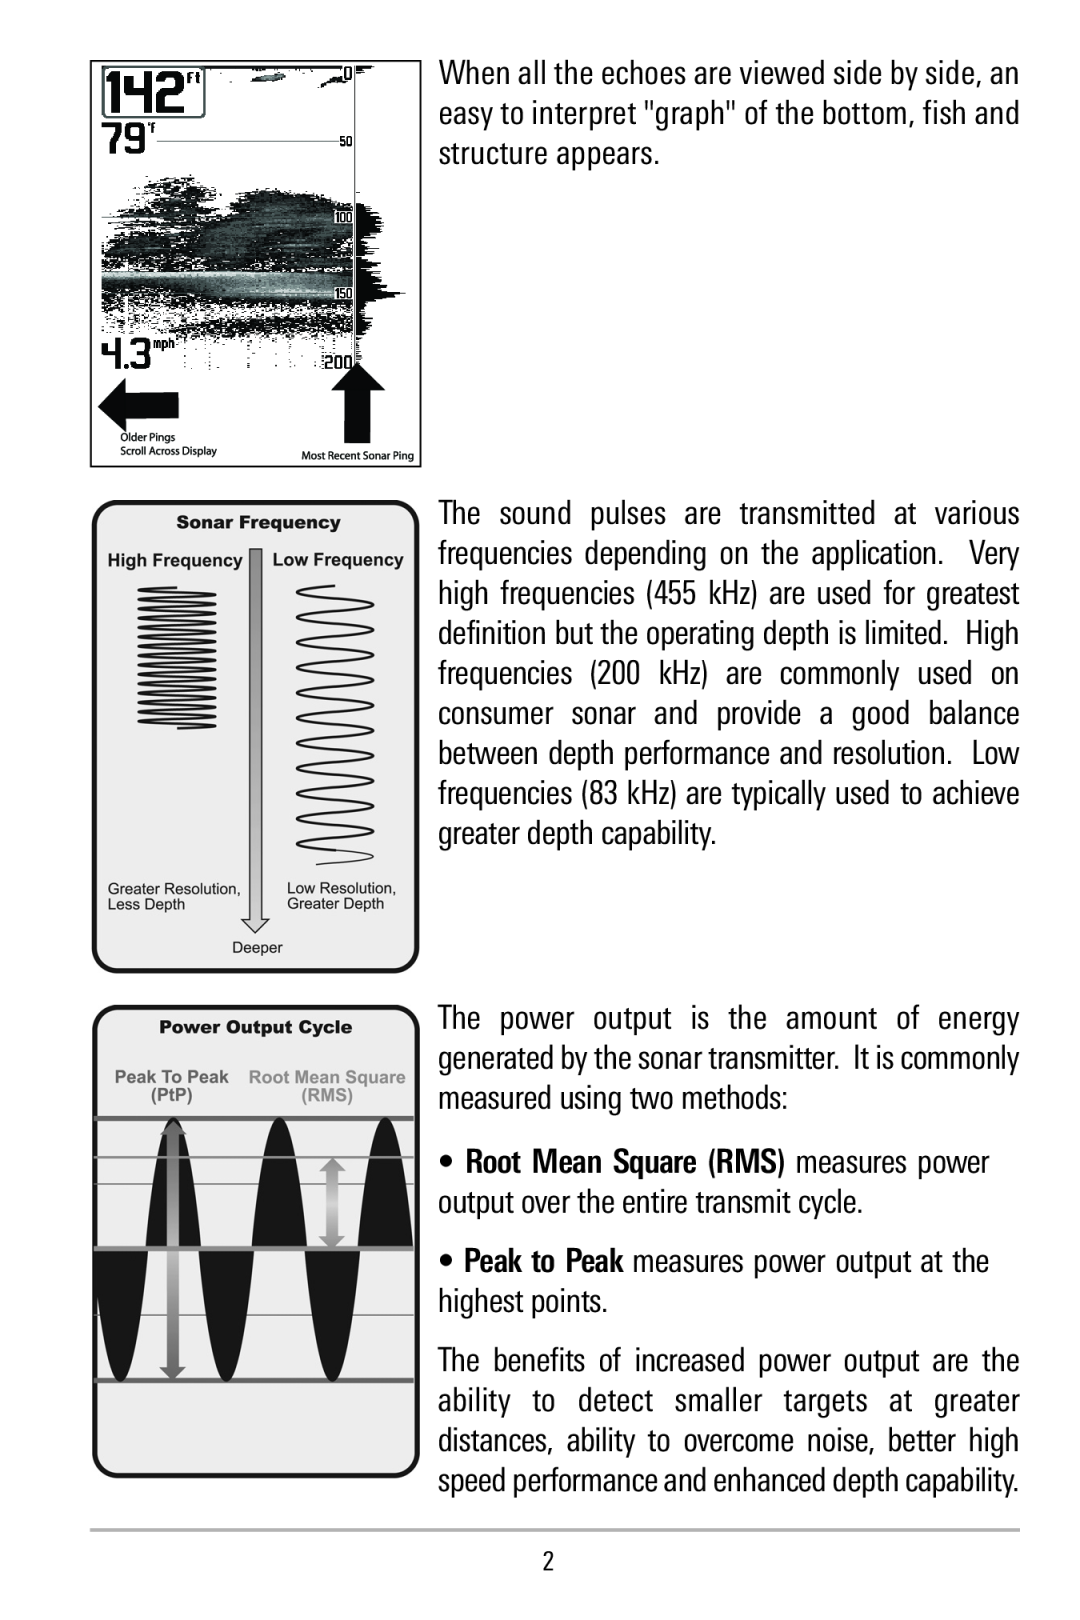 Humminbird 500 series, 515 manual Peak to Peak measures power output at the highest points 